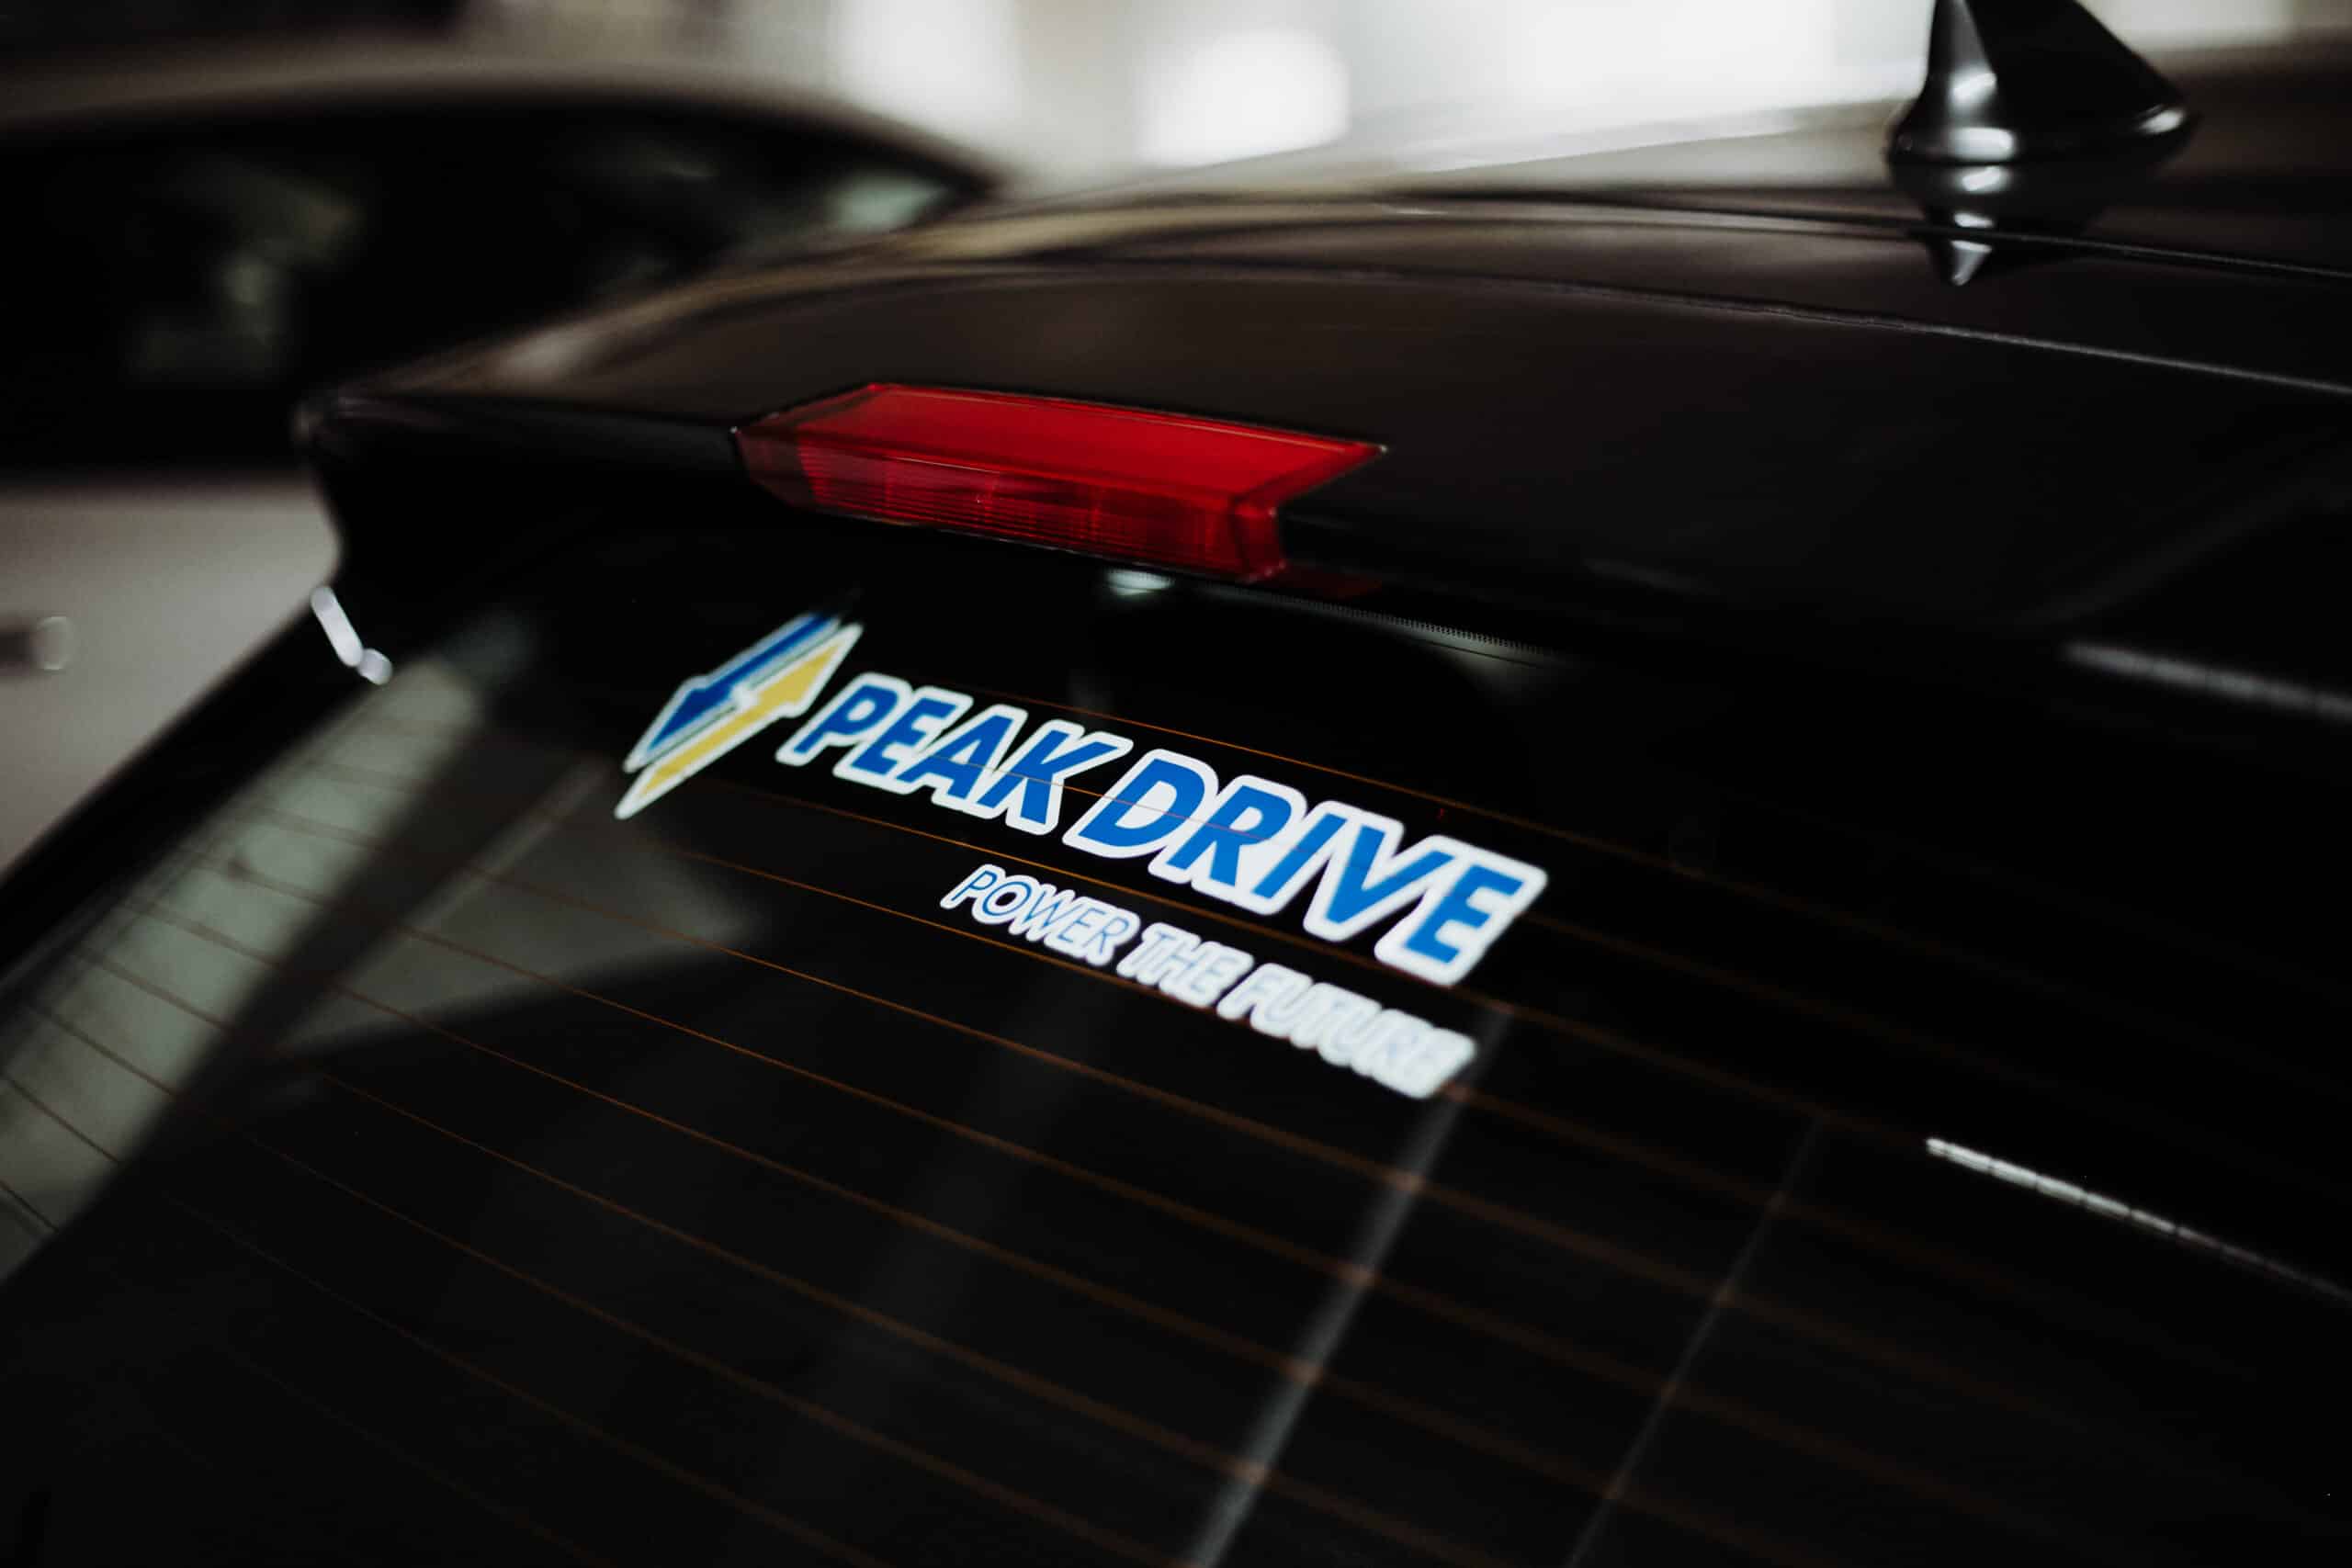 Peak Drive Sticker